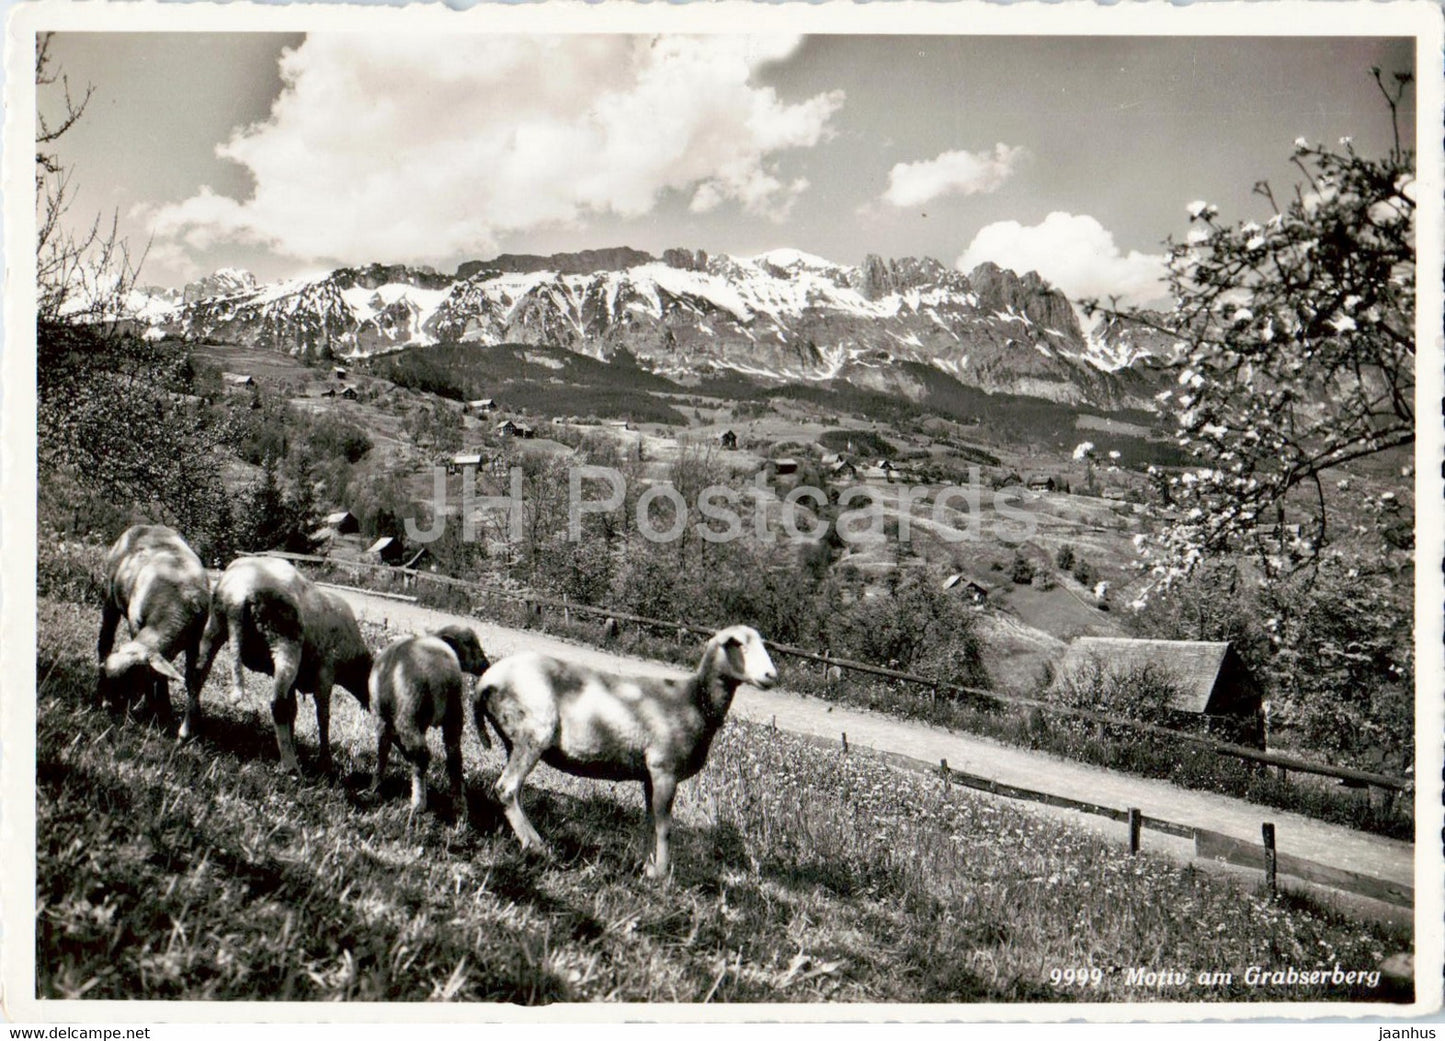 Motiv am Grabserberg - animals - sheep - 999 - old postcard - Switzerland - used - JH Postcards